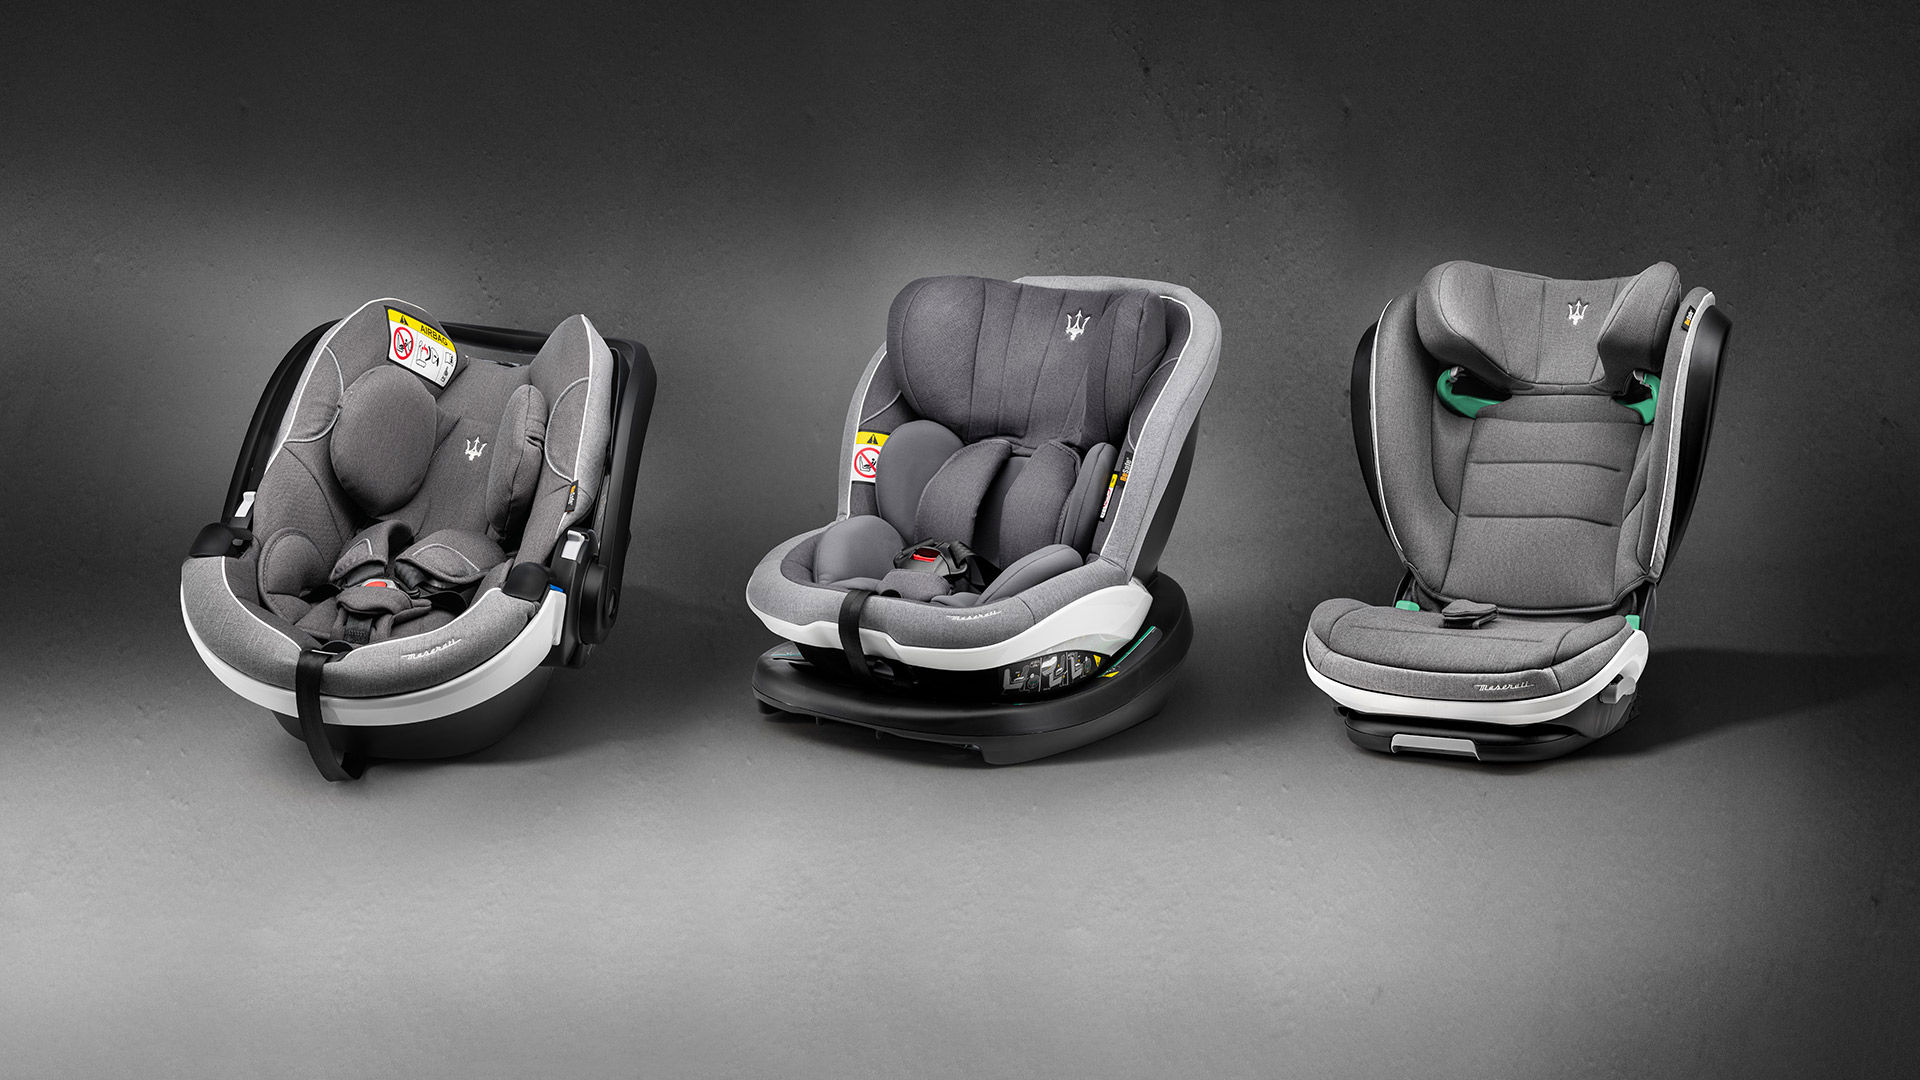 3 models of child seats for Maserati vehicle